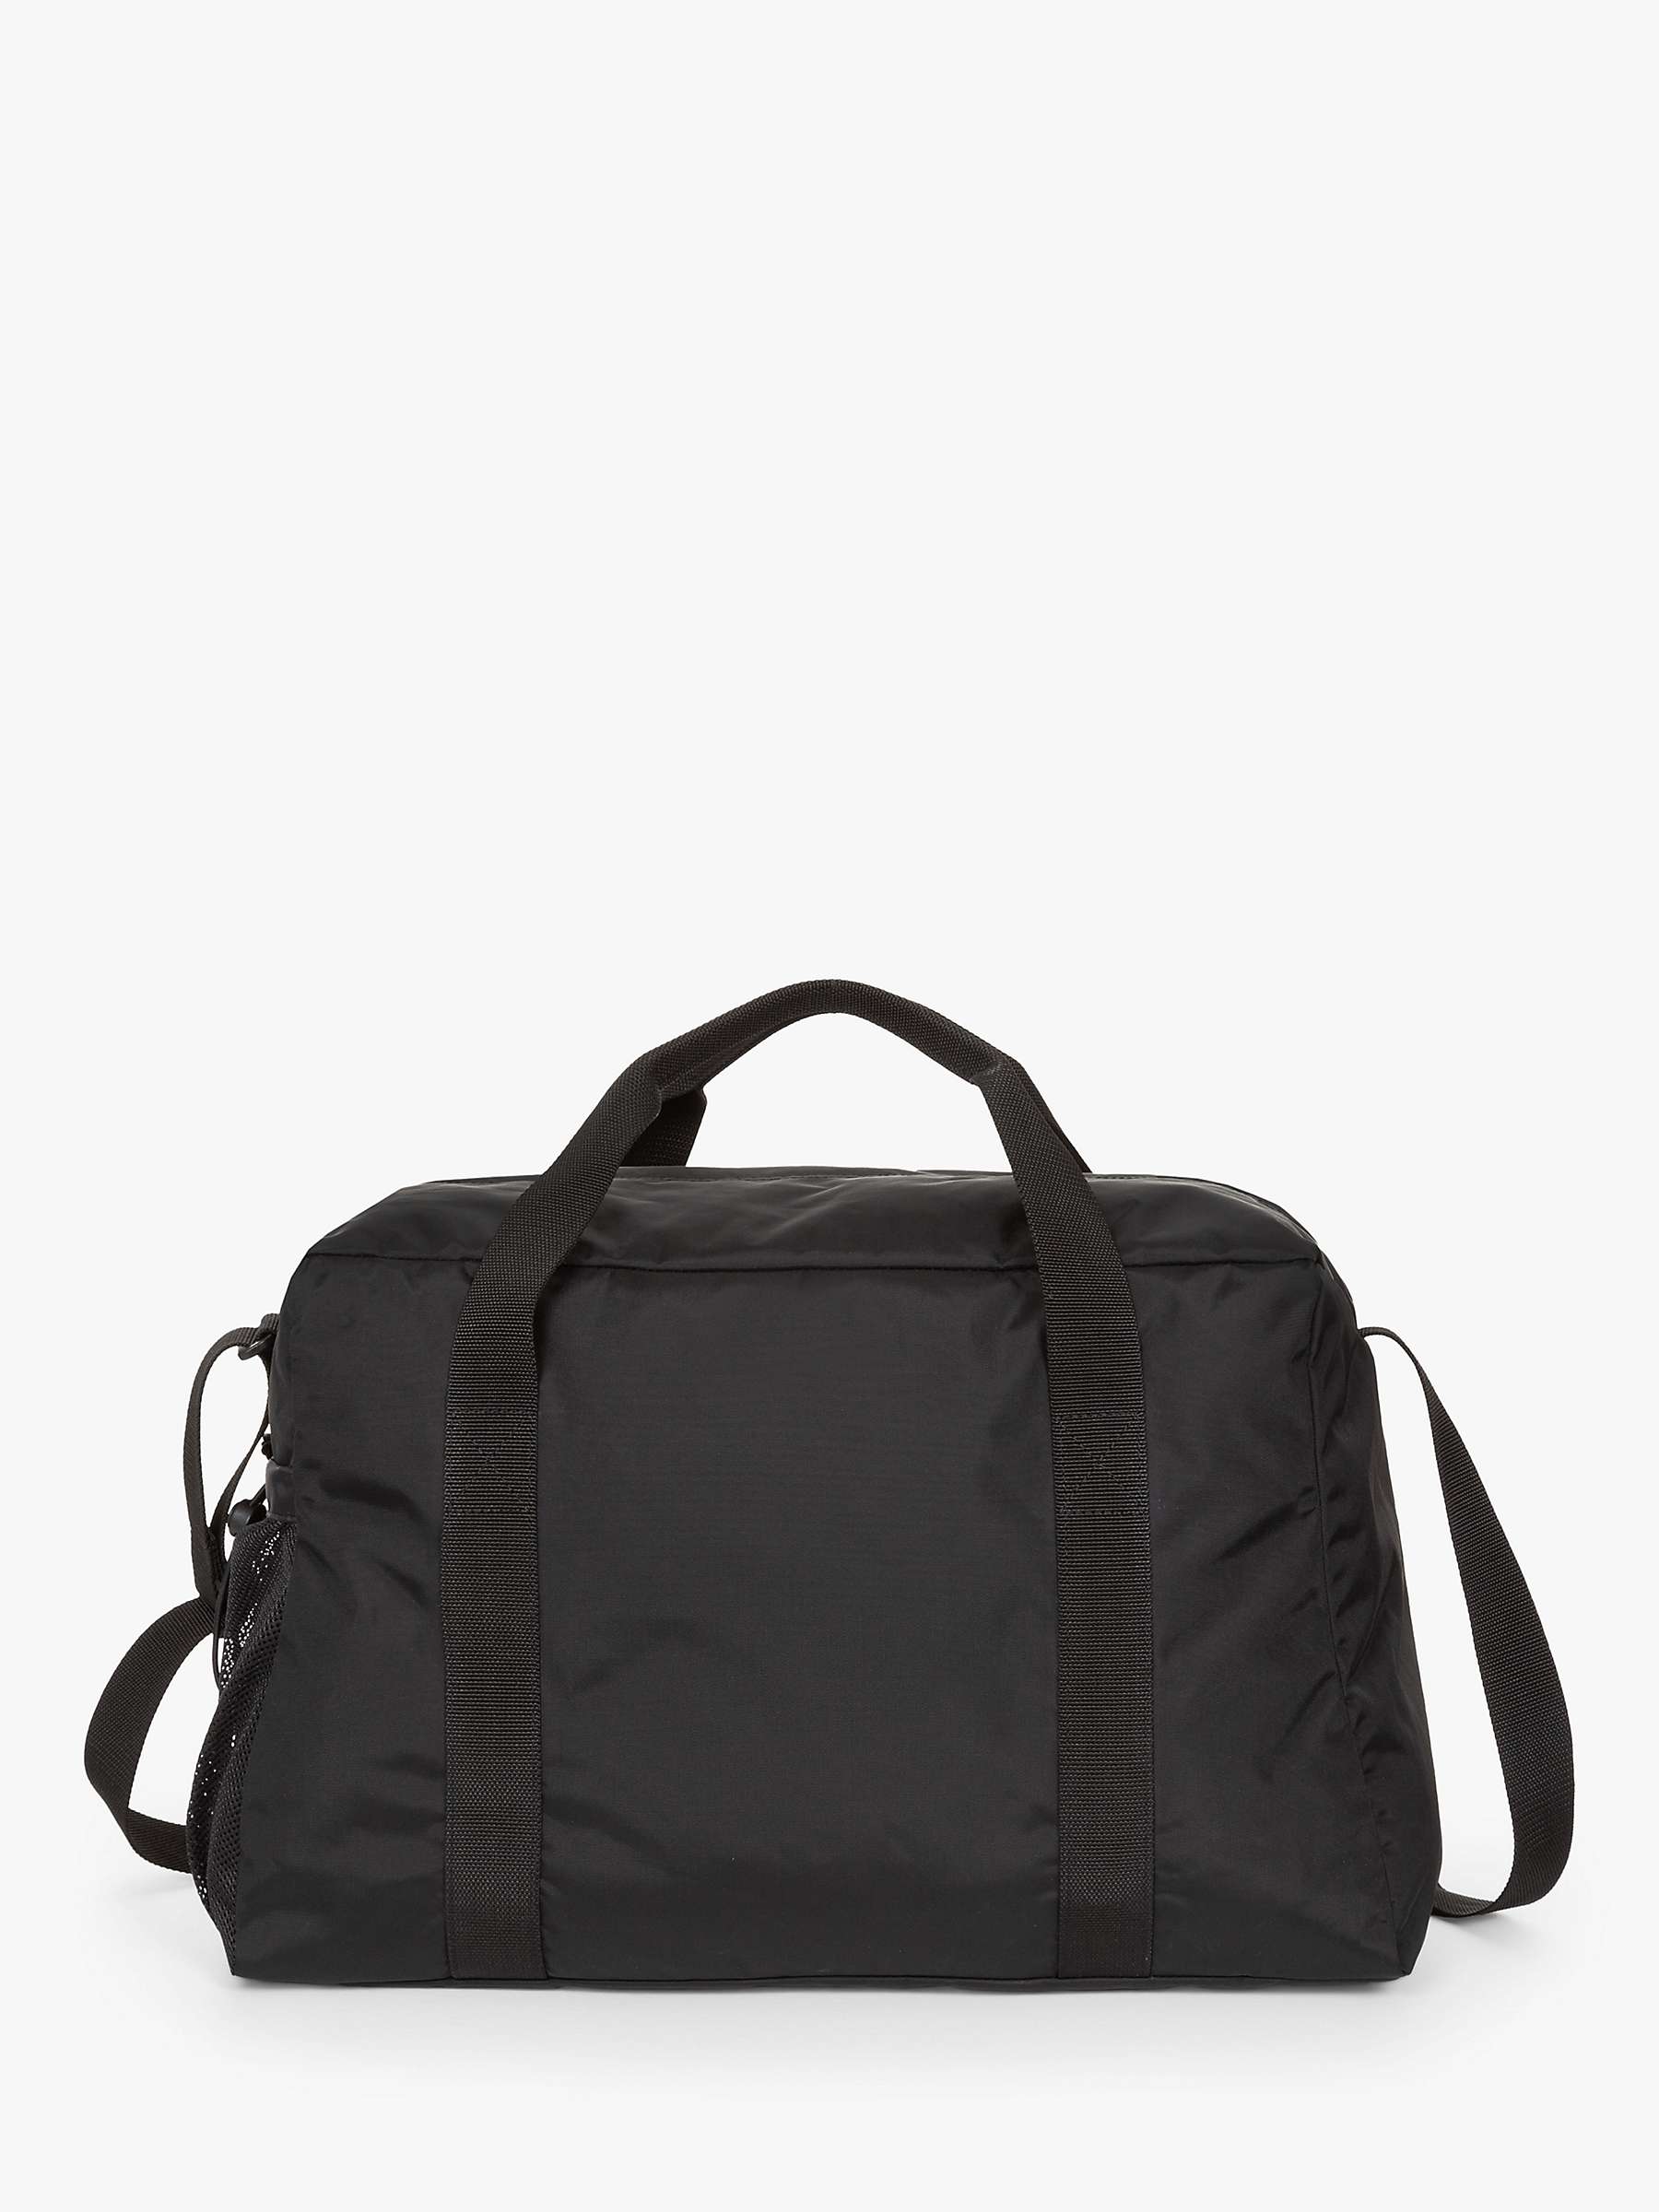 Buy Eastpak Flynn POWR Duffle Bag, Black Online at johnlewis.com